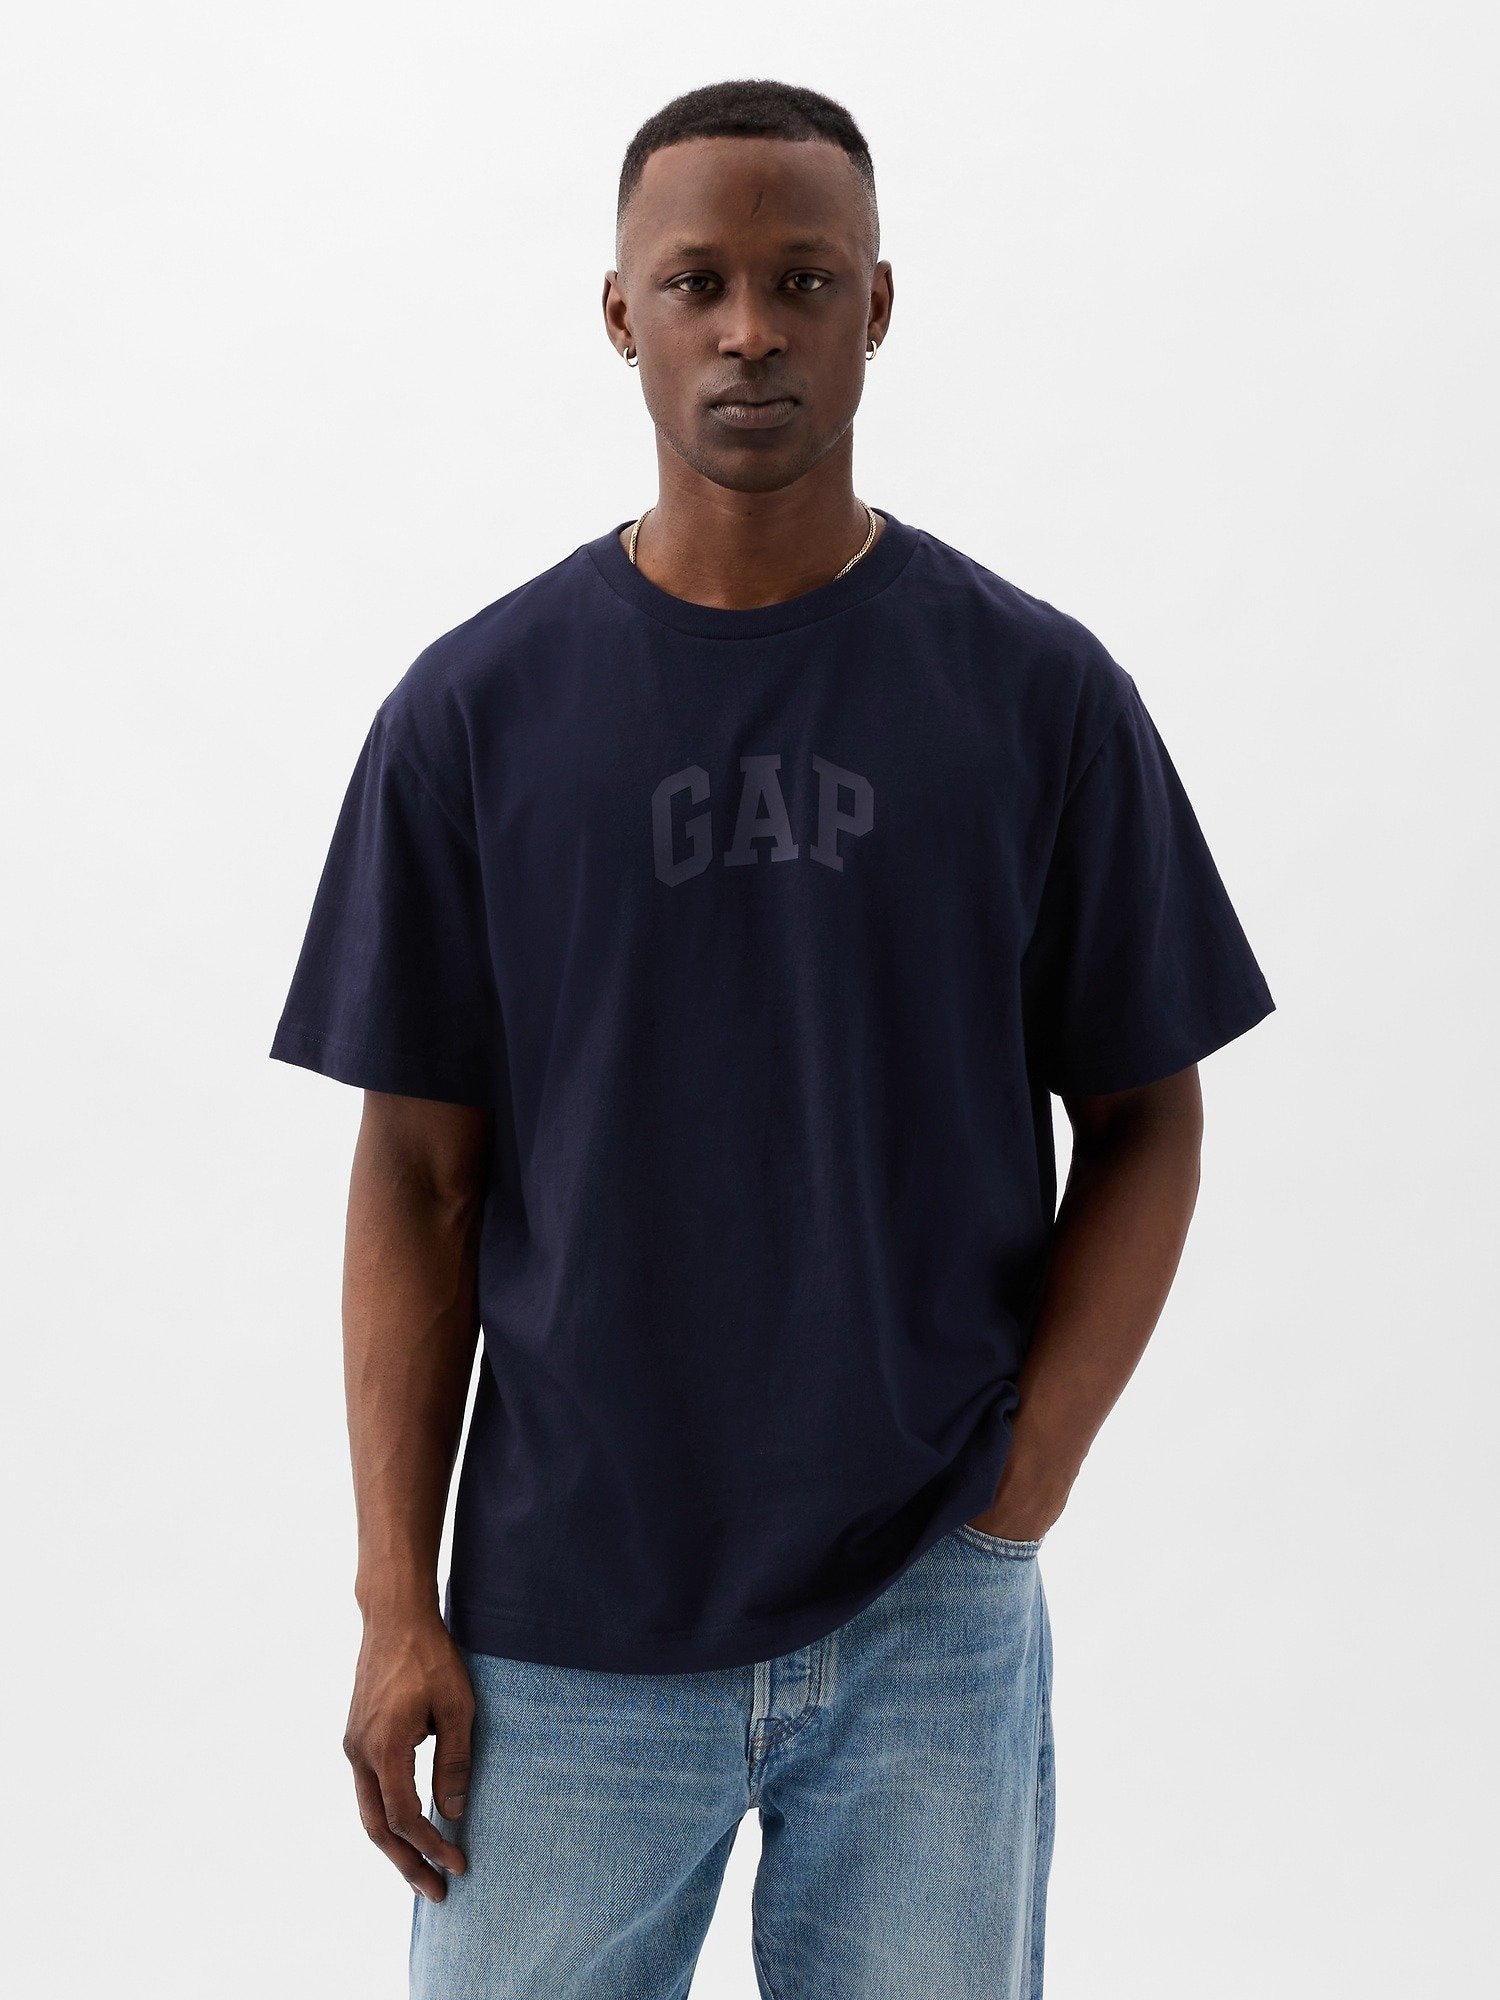 Gap Arch Logo T-Shirt product image